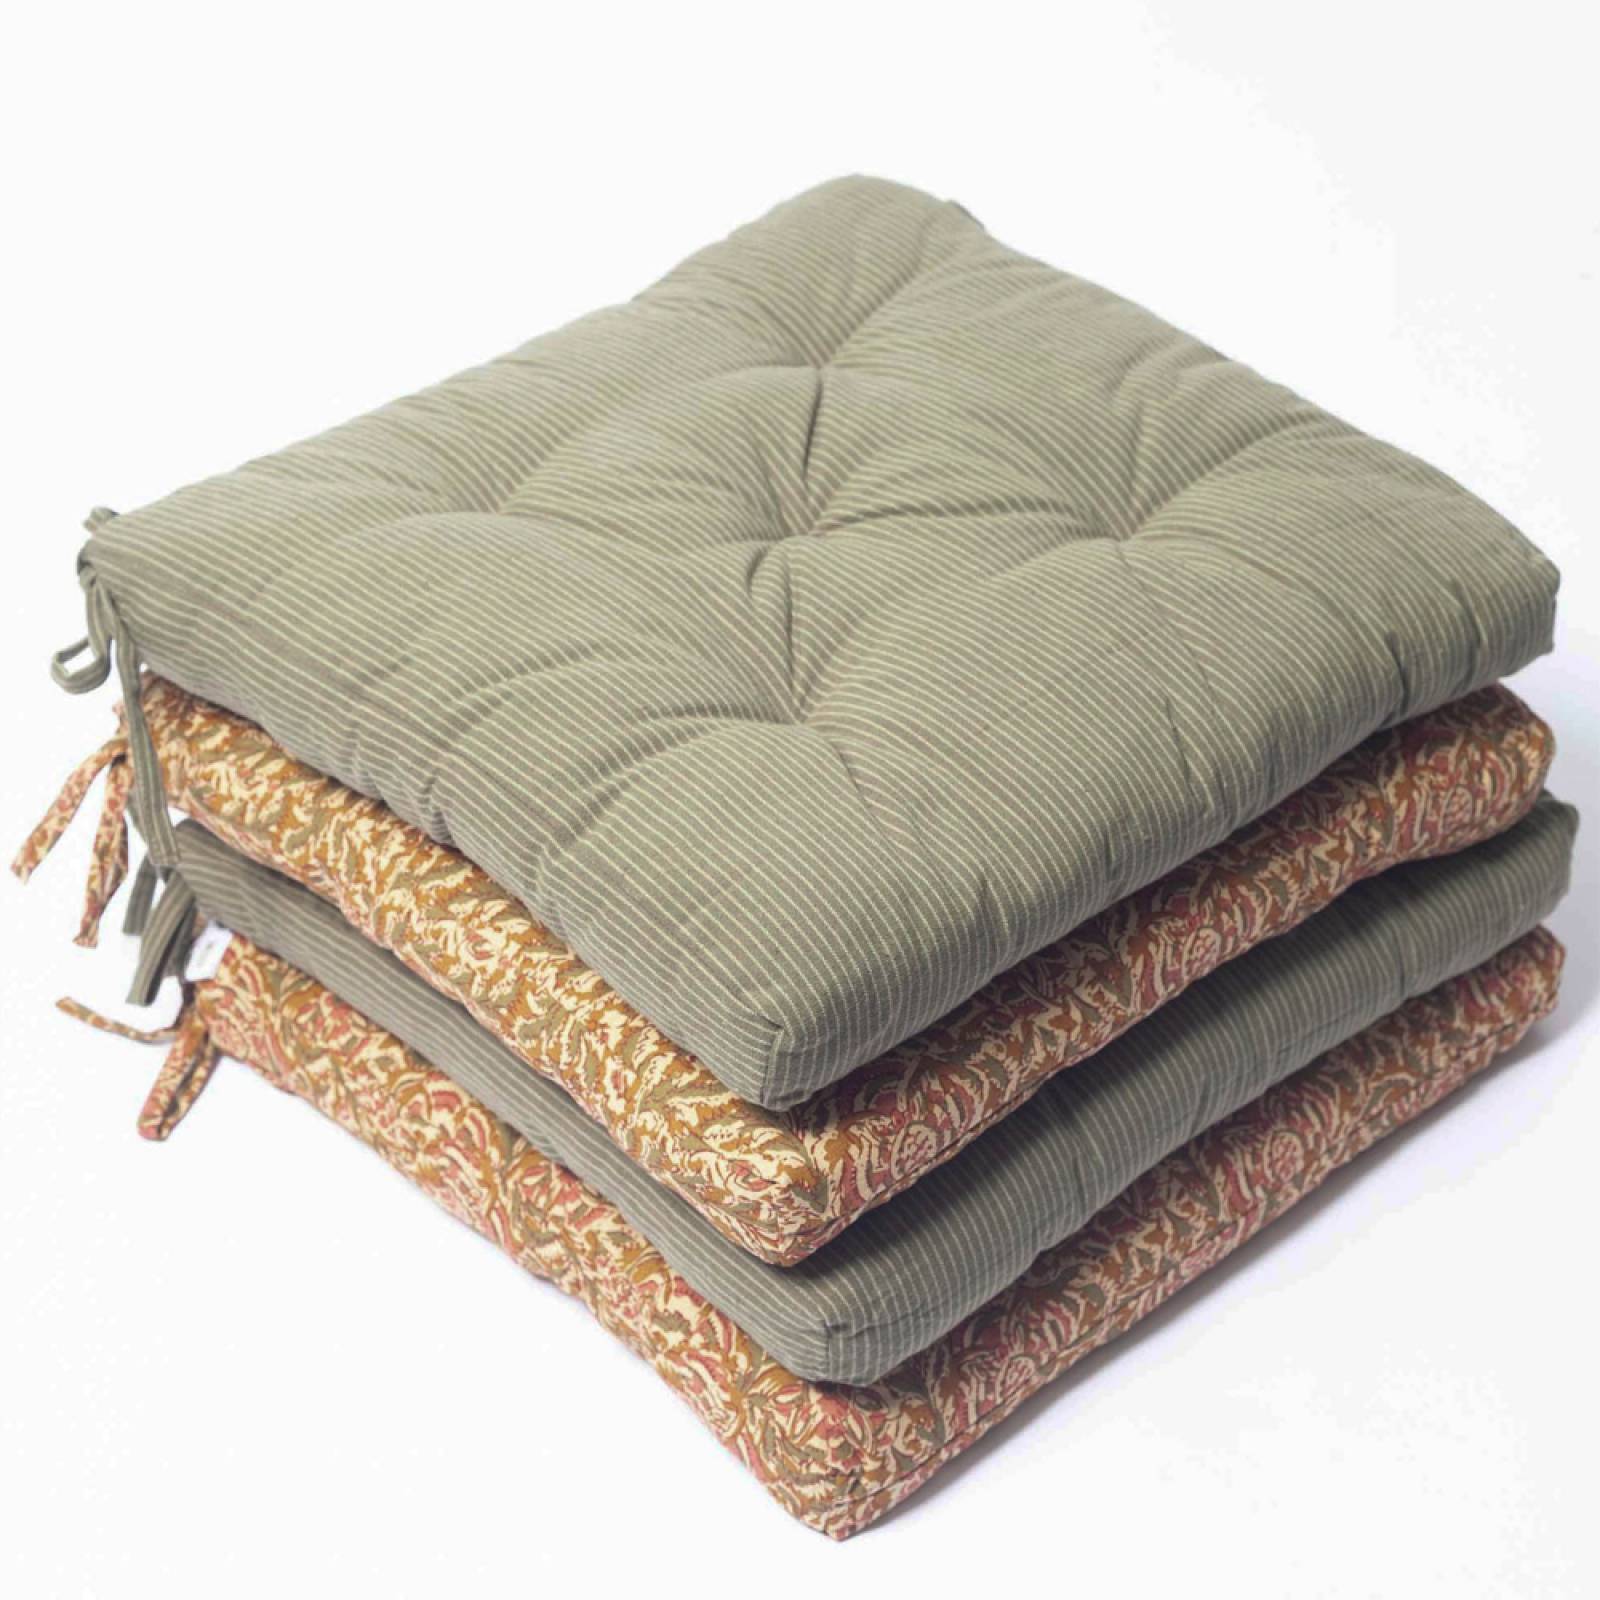 Printed Seat Pad Cushion In Striped Jade thumbnails